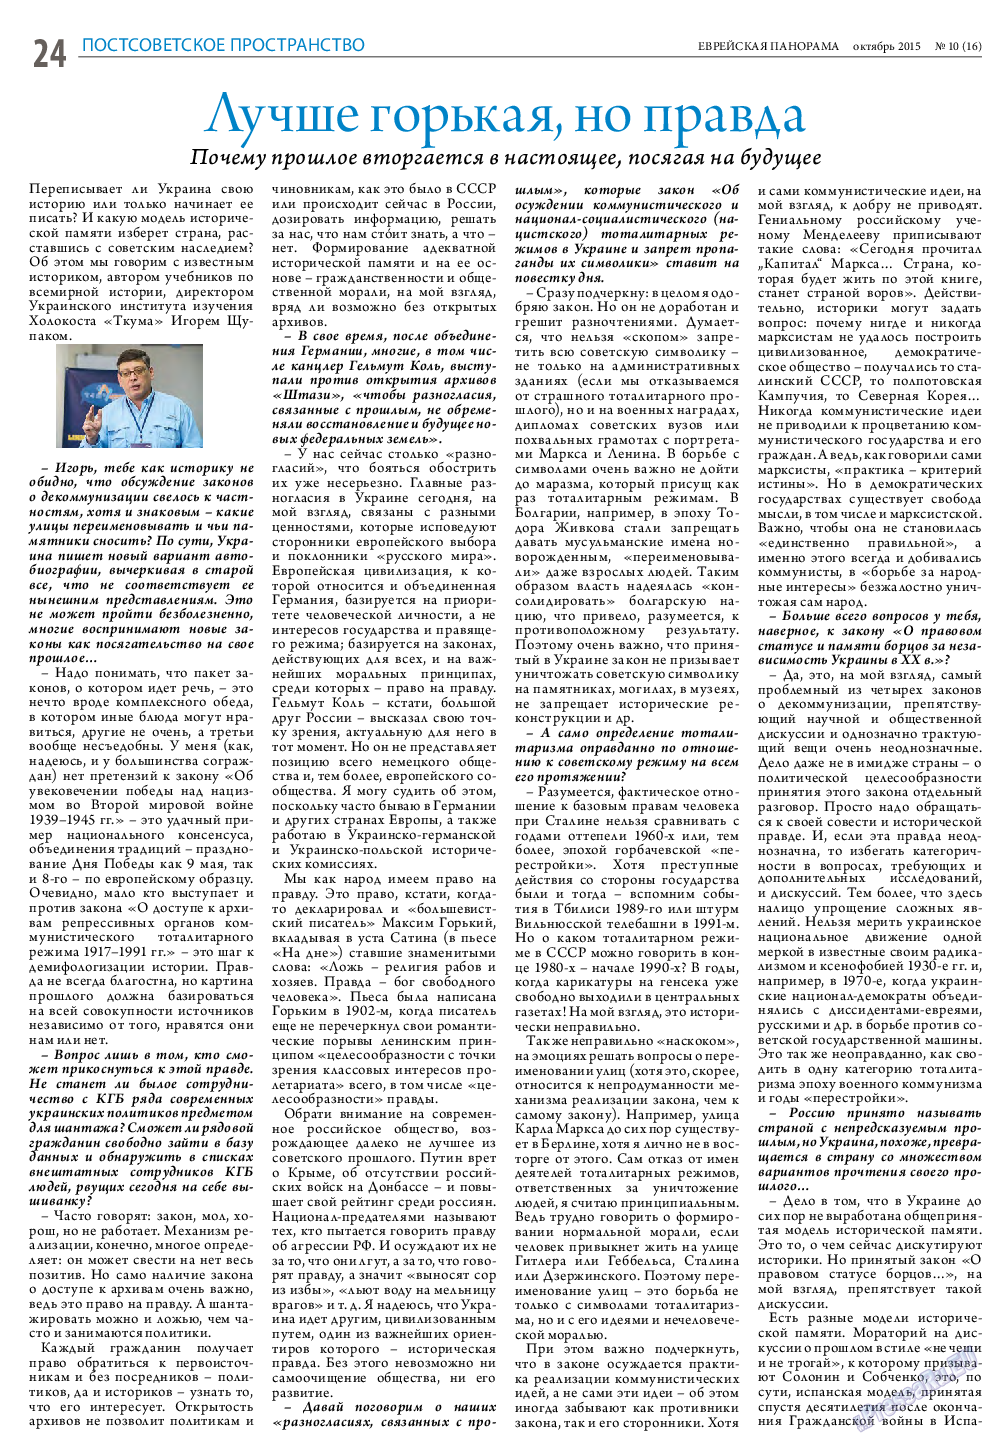 Еврейская панорама, газета. 2015 №10 стр.24